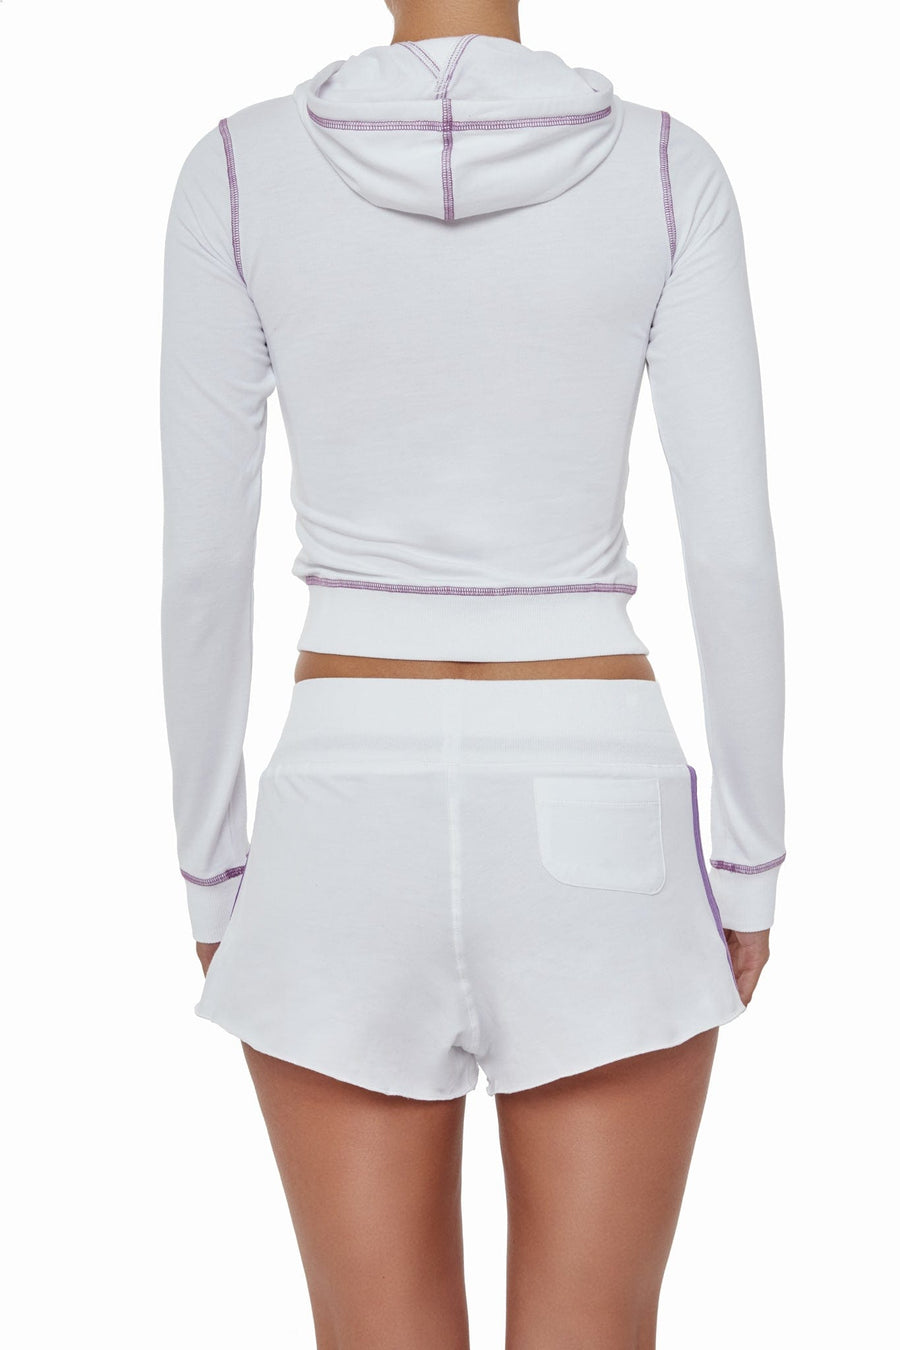 ESPRITE shorts- bianco/ violet  -  CLOTHING  -  B Ā M B A S W I M